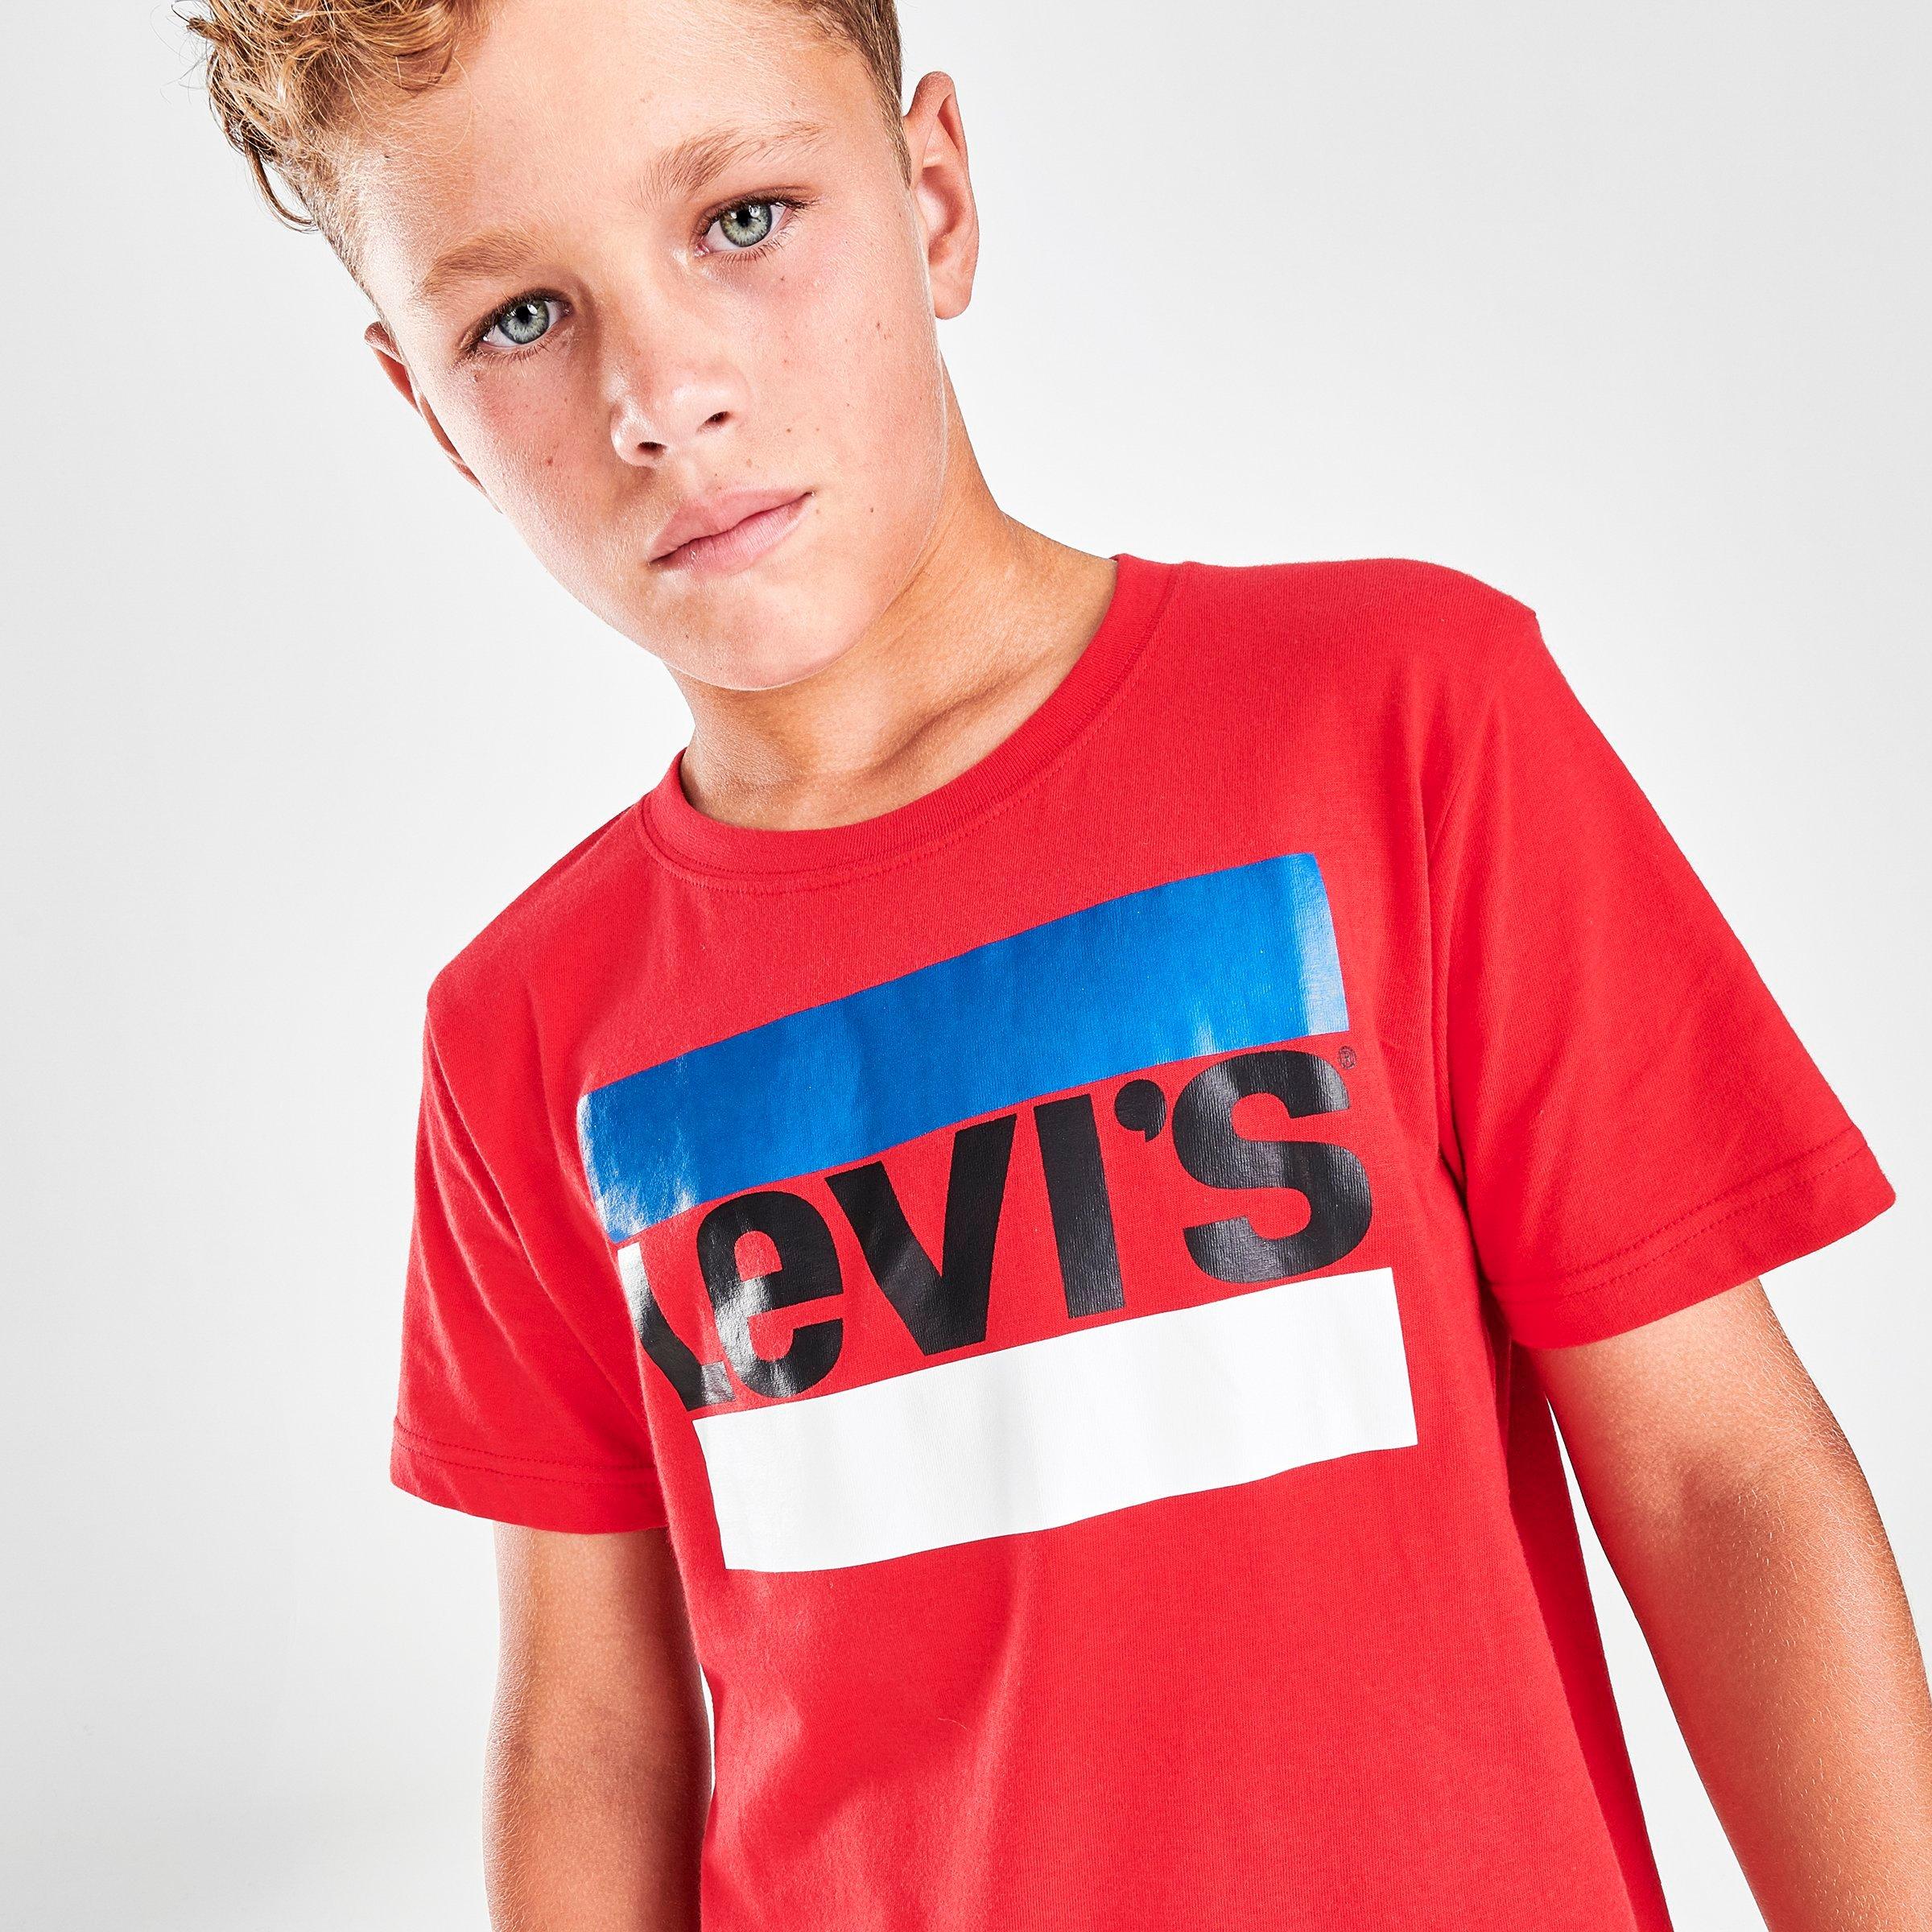 levis red logo t shirt